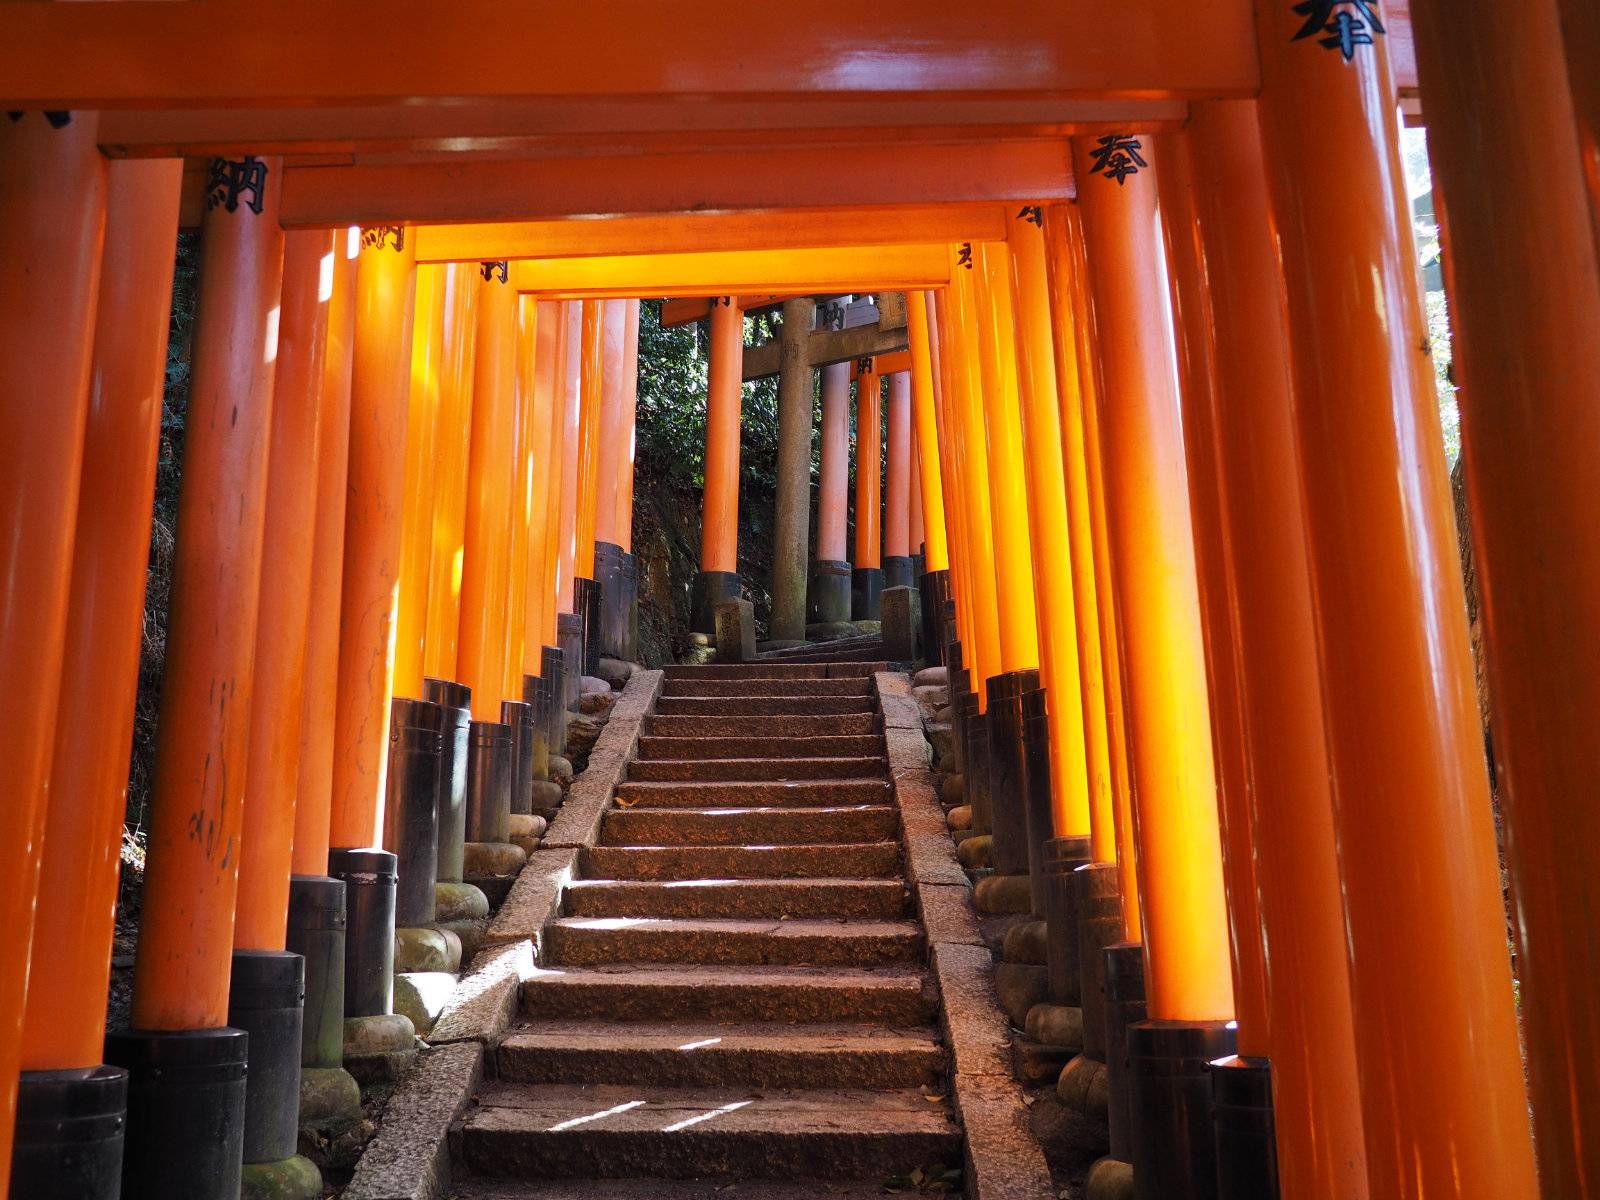 Continuing further up Fushimi Inari Taisha